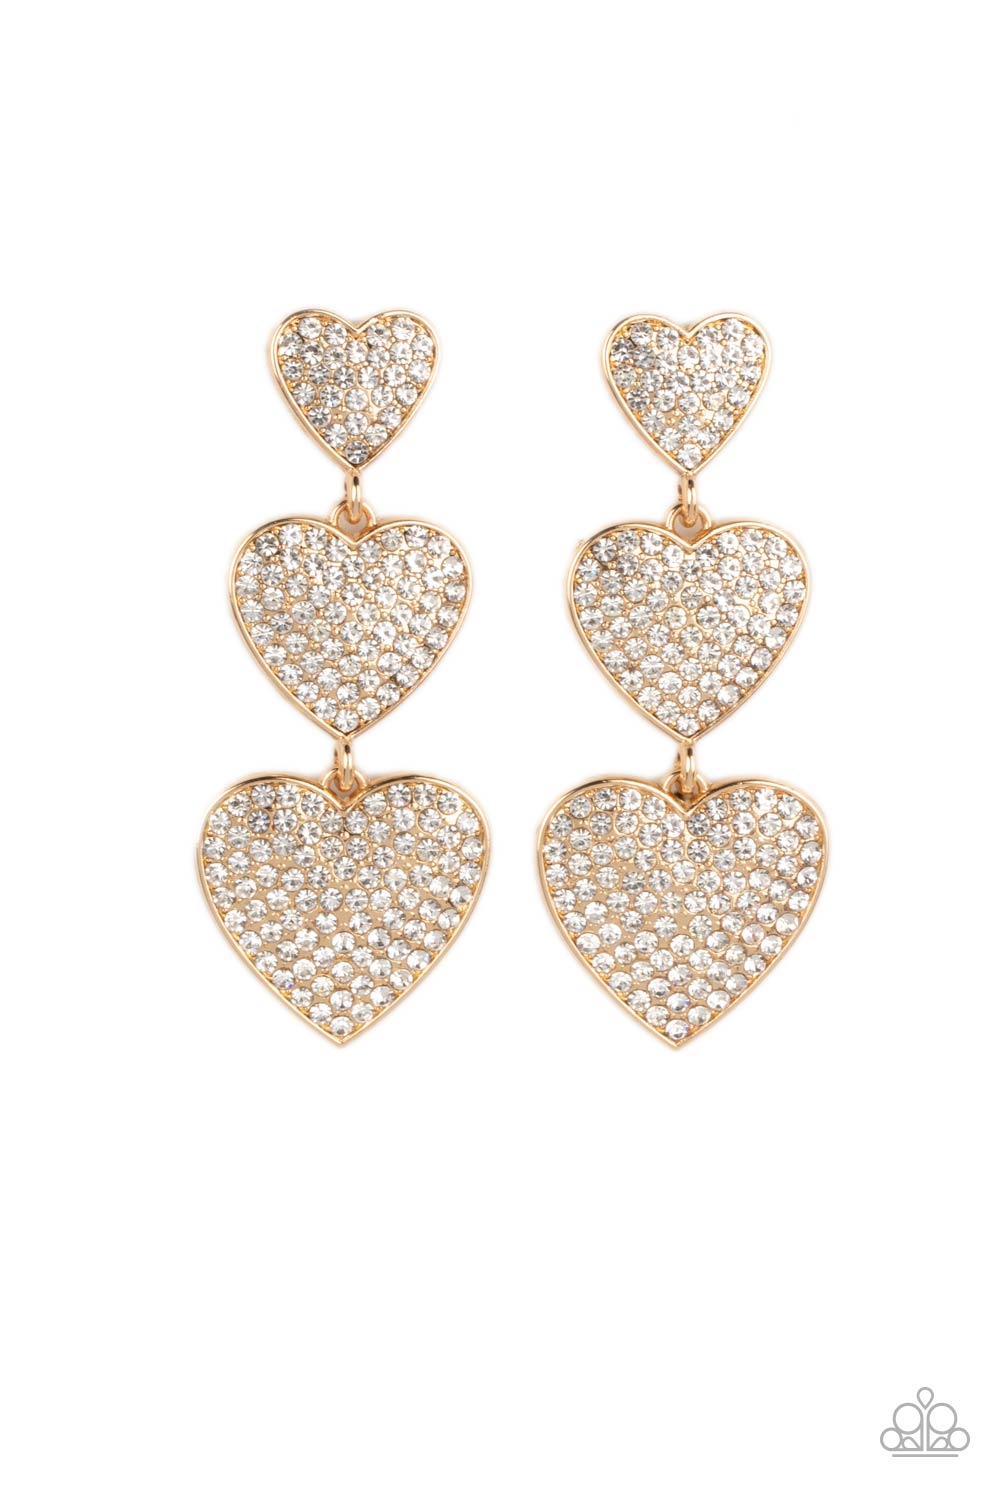 Spellbinding Sweetheart Gold Necklace & Bracelet Set - Paparazzi Accessories